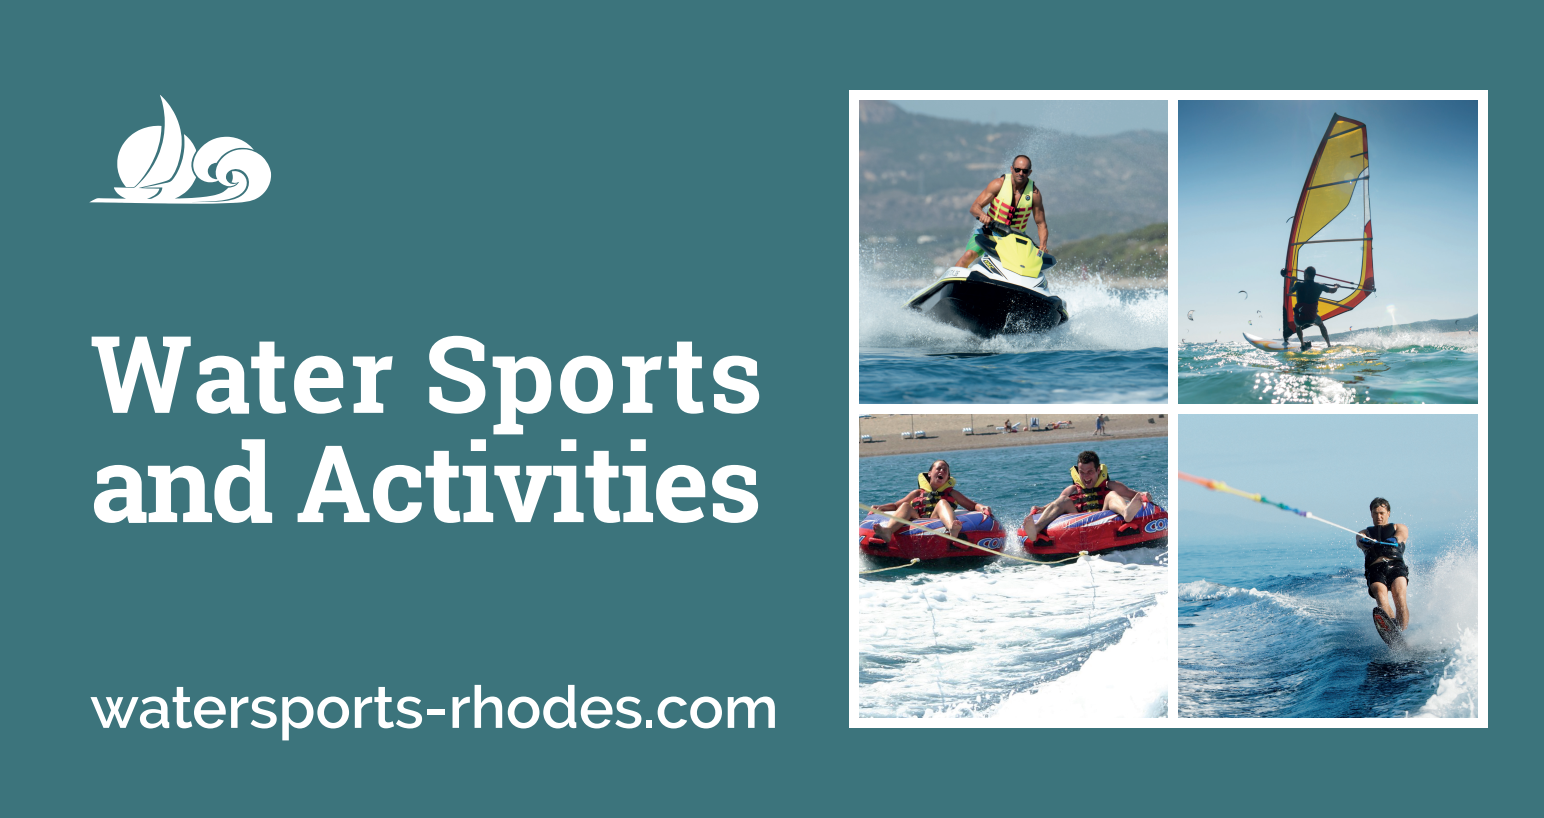 Watersports Rhodes - watersports center Kiotari: windsurfing, catamaran, jetbike, parasailing, waterski,, wakeboard, stand-up-paddling